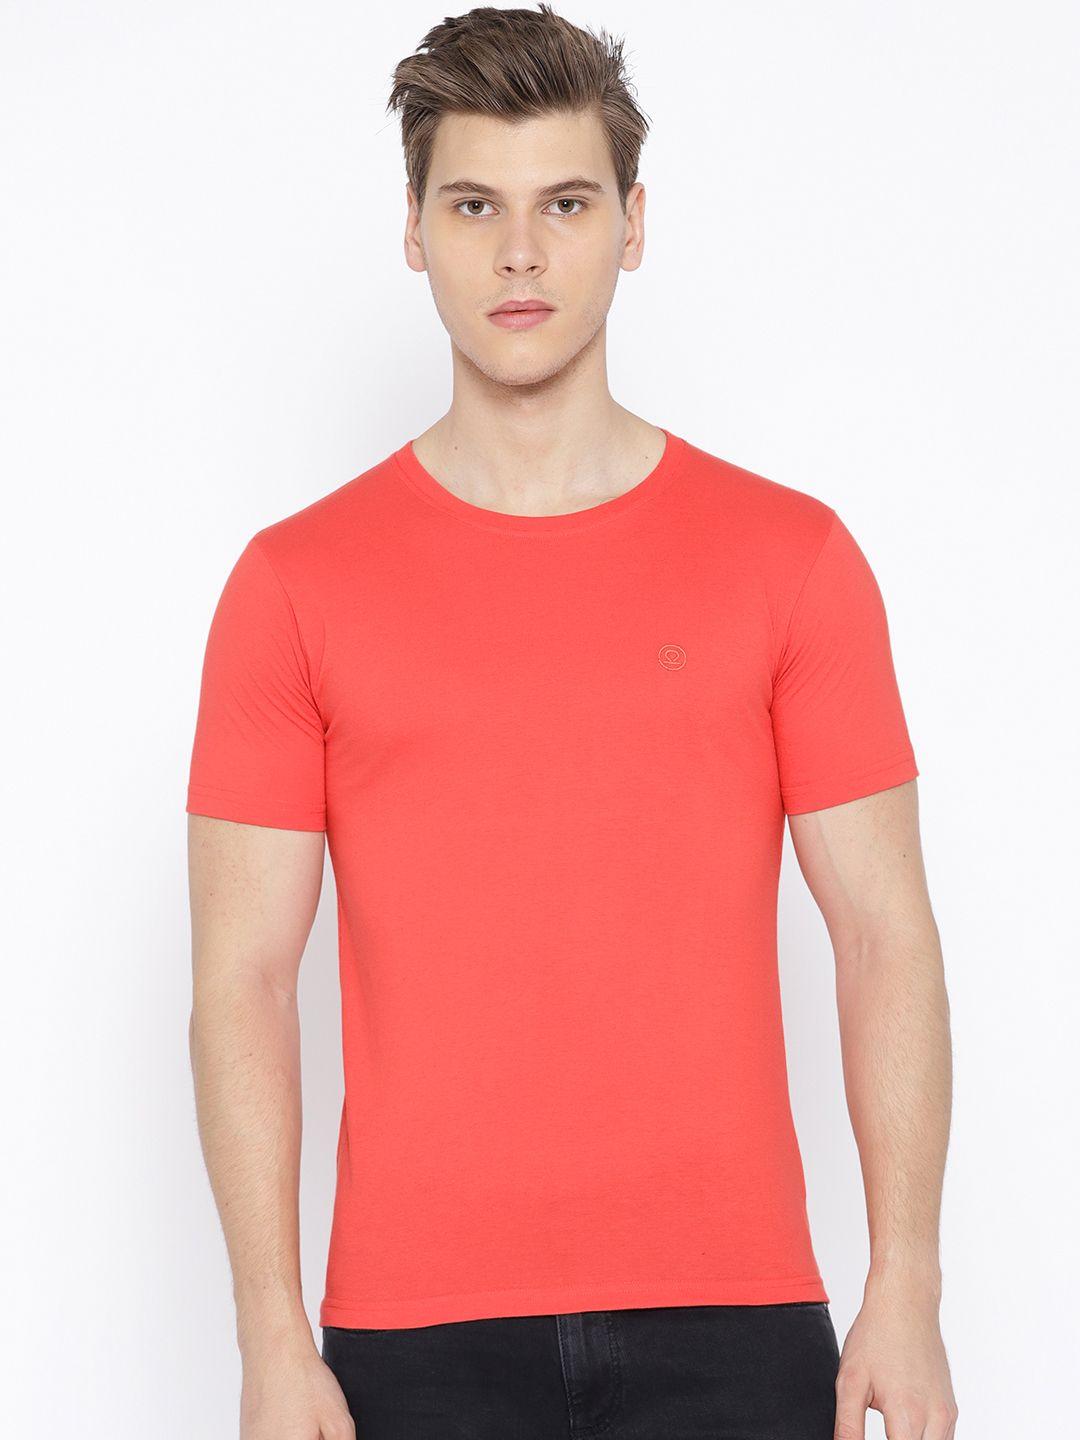 chkokko-men-coral-pink-solid-round-neck-t-shirt